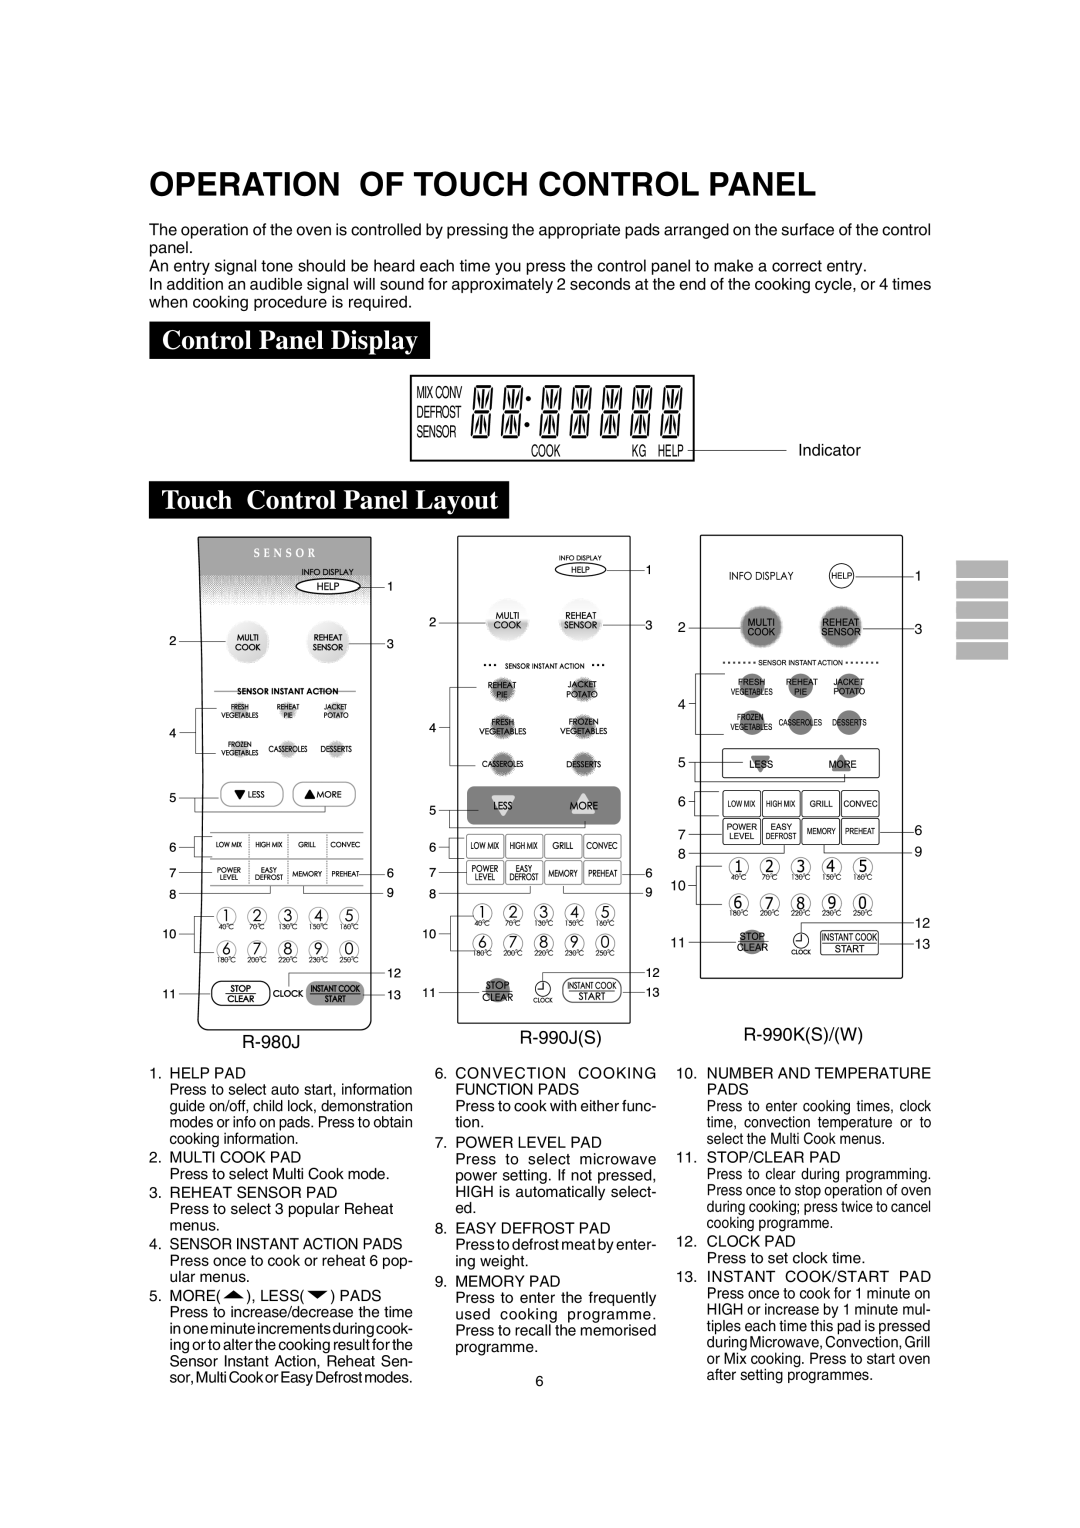 Sharp R-980J, R-990K(S)/(W), R-990J(S) Operation Of Touch Control Panel, Control Panel Display, R-990JSR-990KS/W 